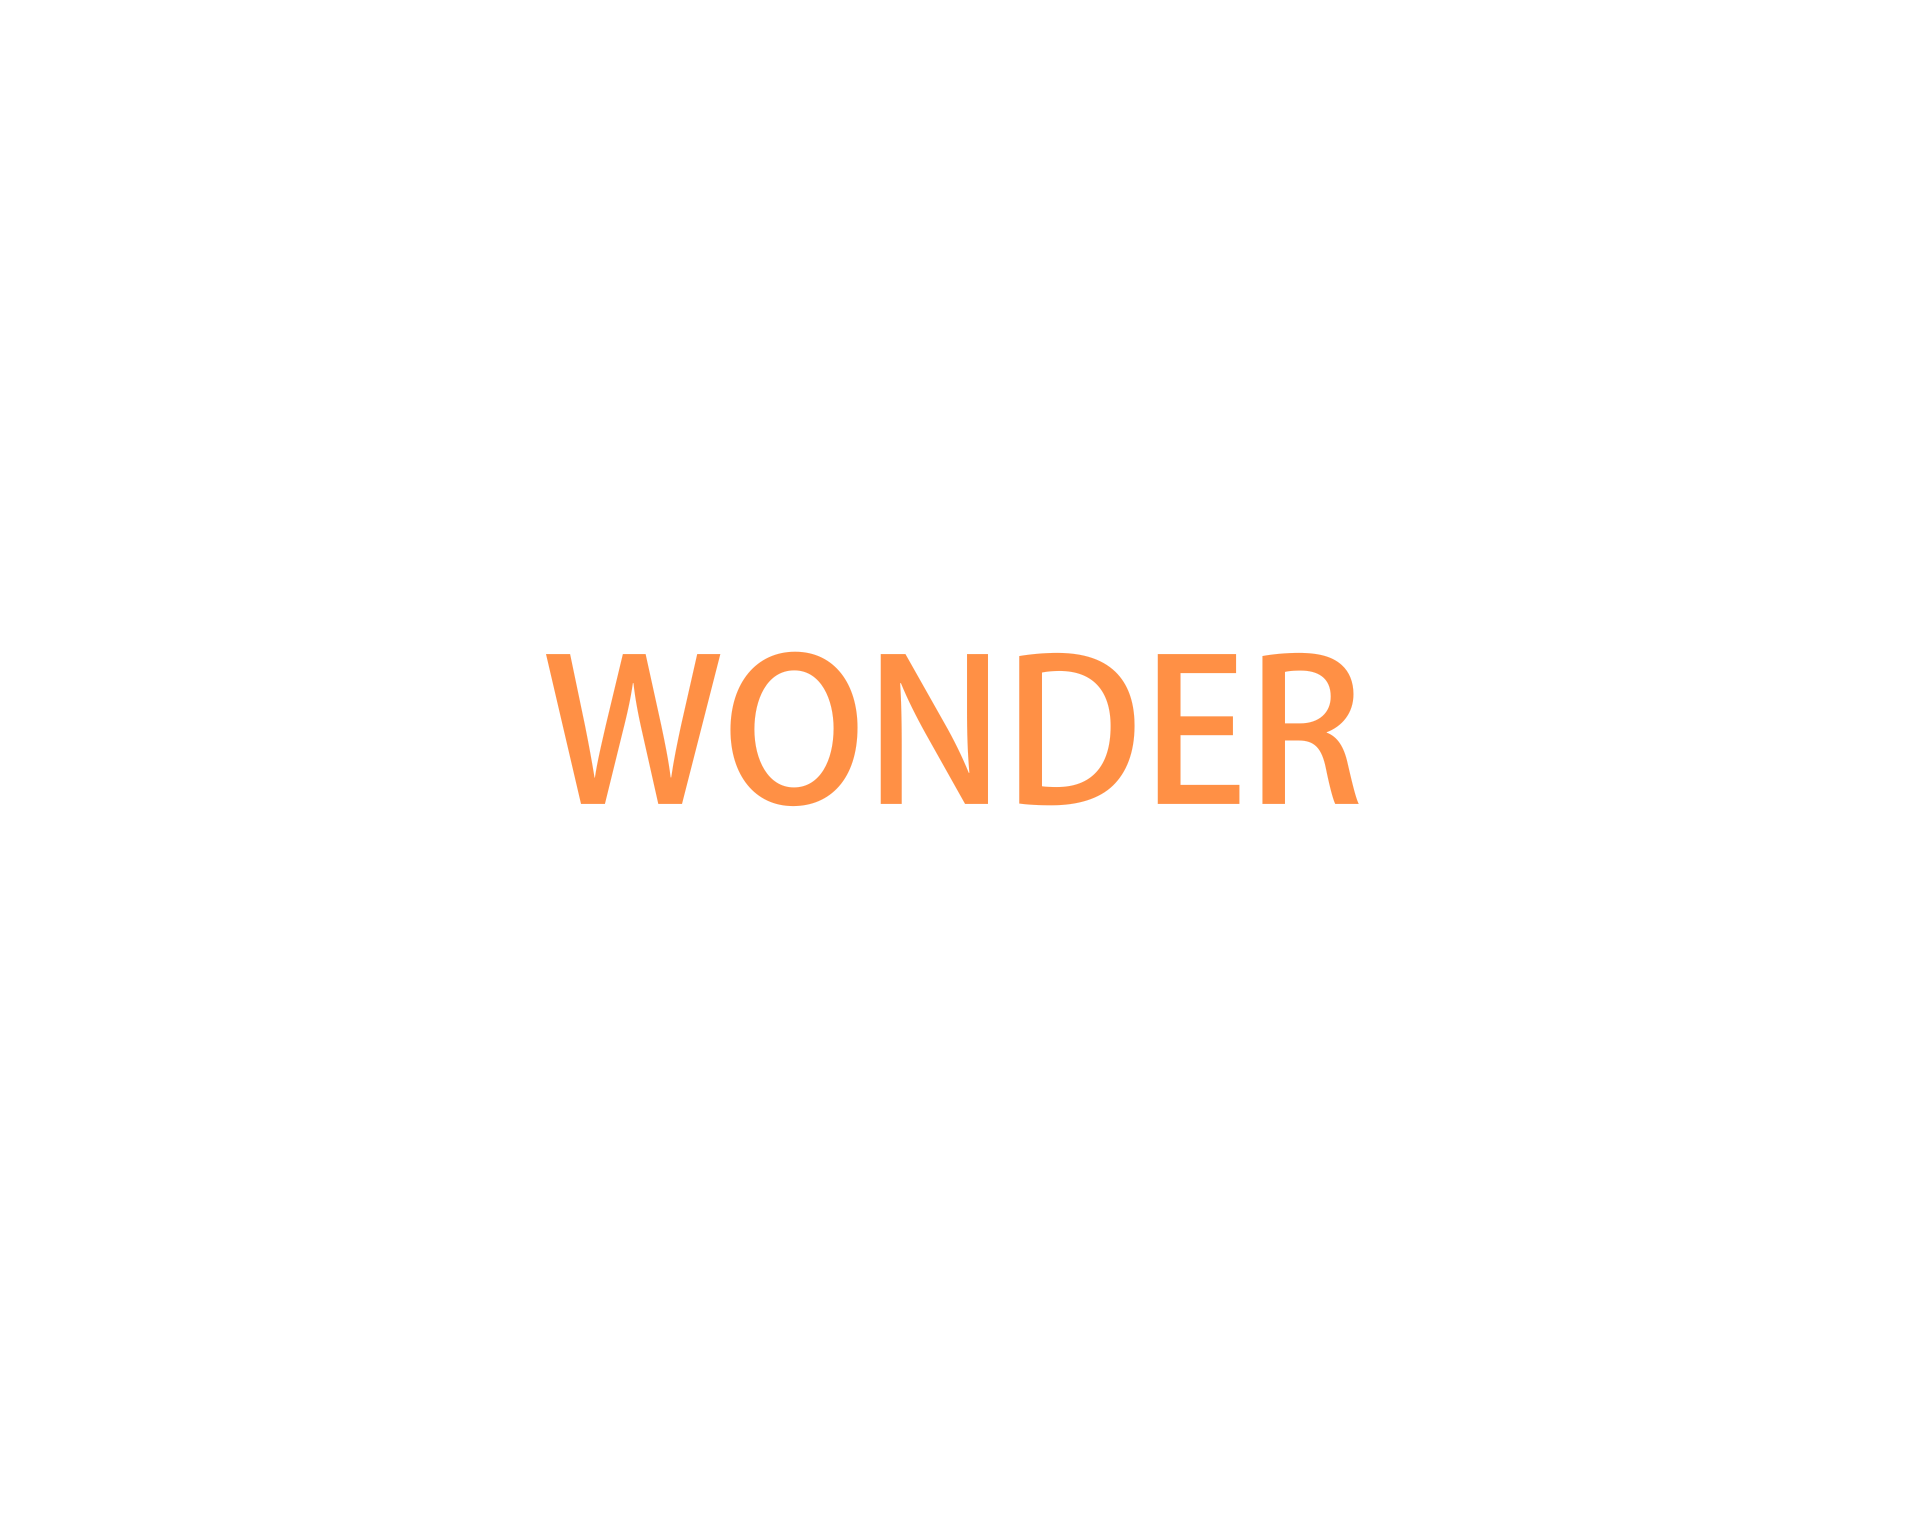 Wall Wonderprint